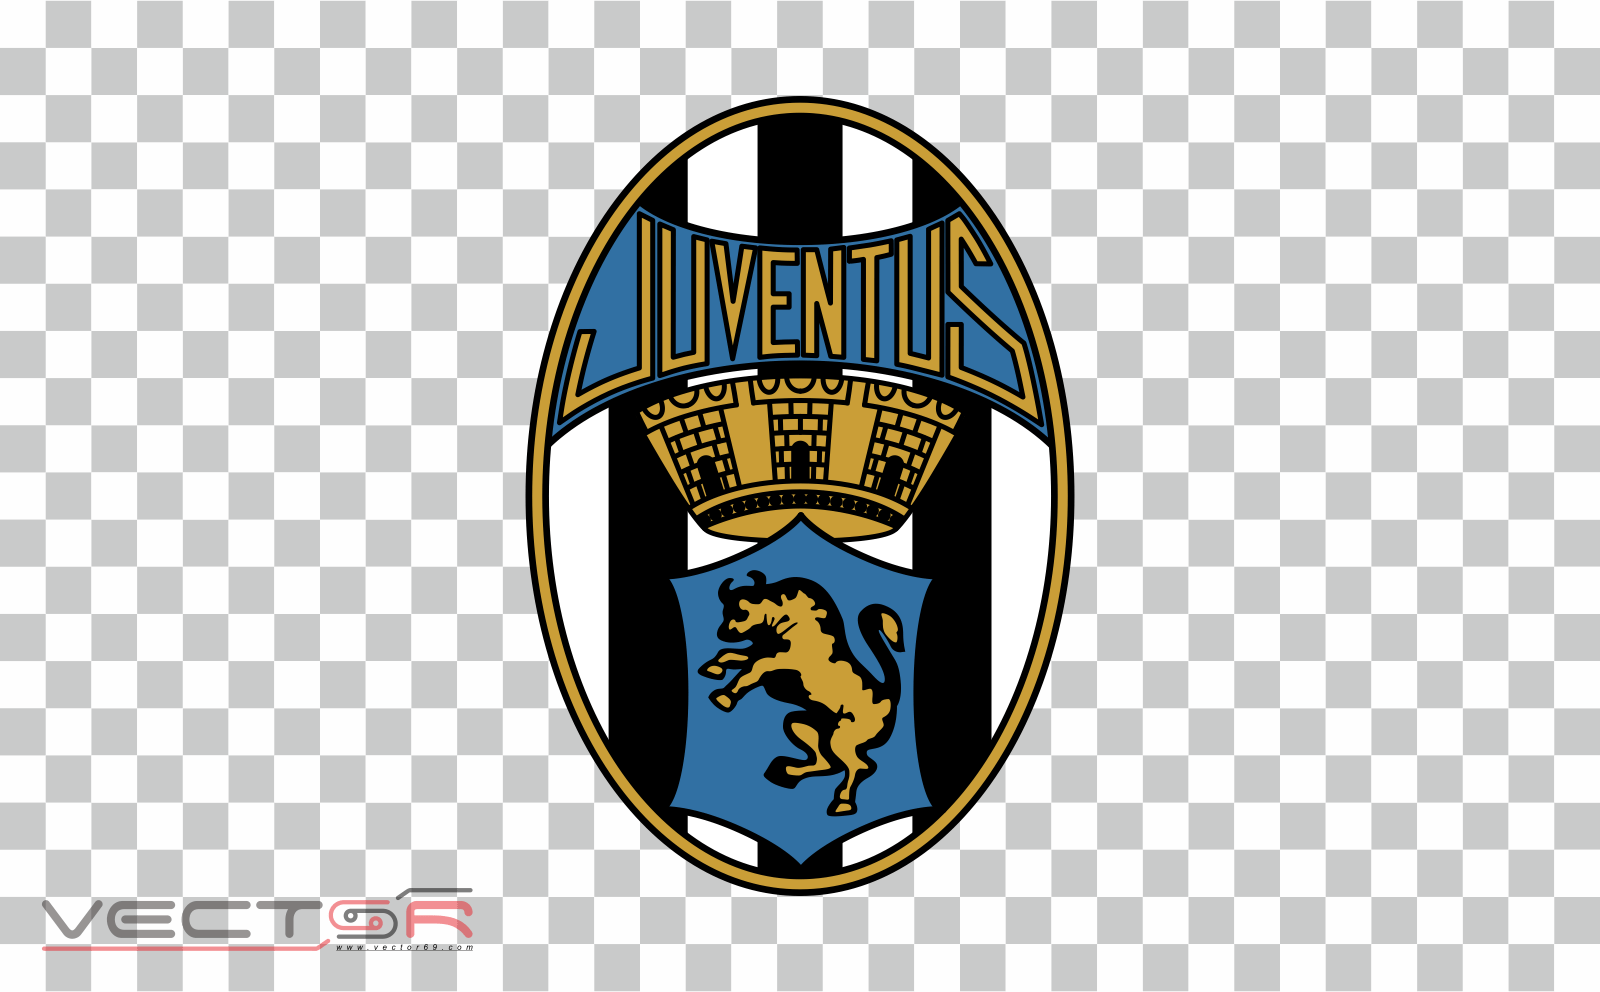 Juventus F.C. (1931) Logo - Download .PNG (Portable Network Graphics) Transparent Images